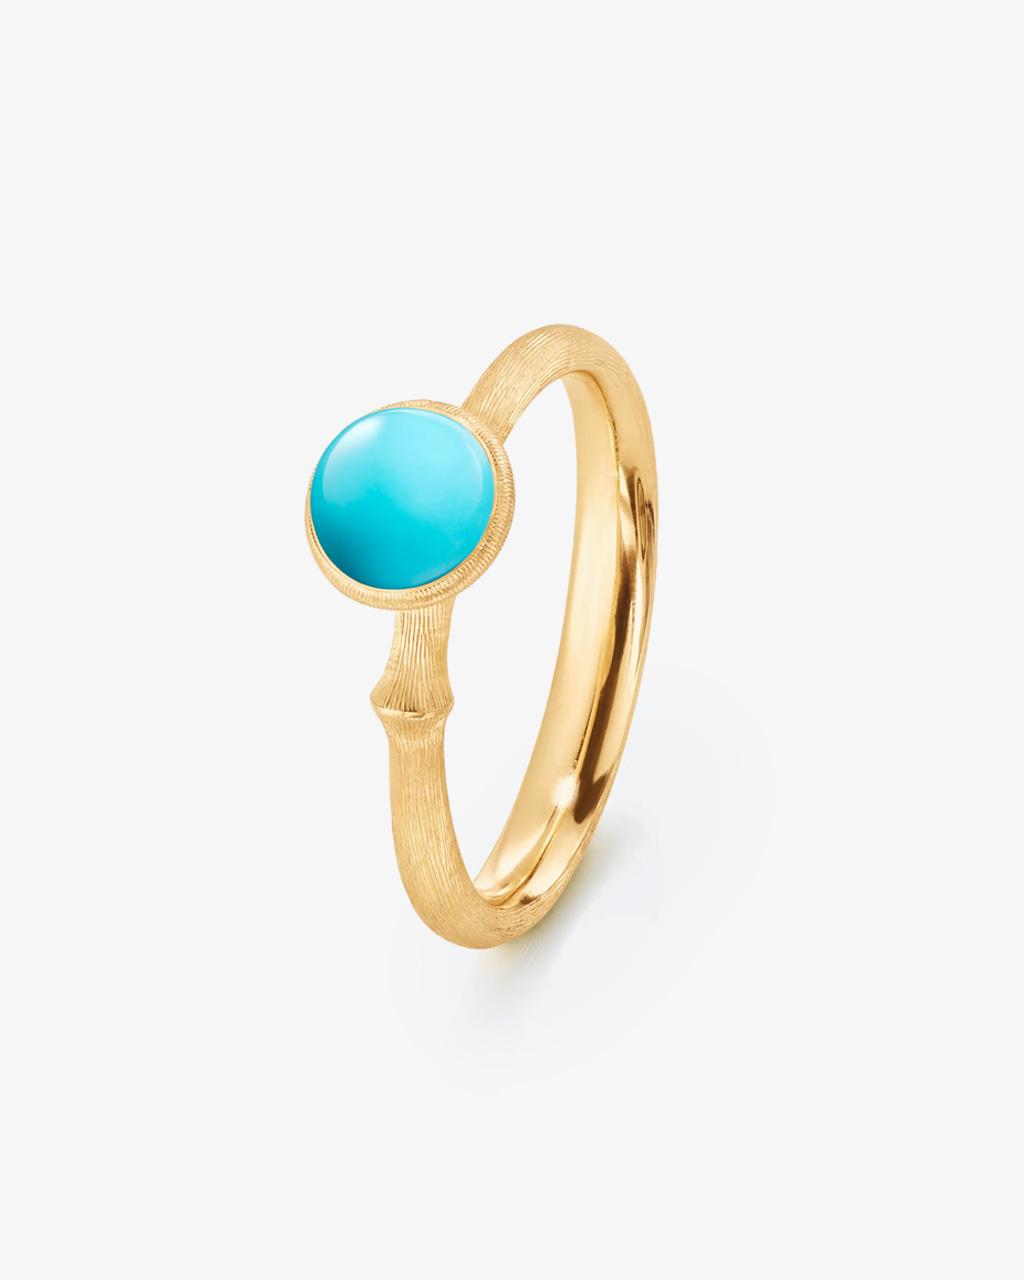 Ole Lynggaard 'Lotus' Turquoise Ring - Tiny